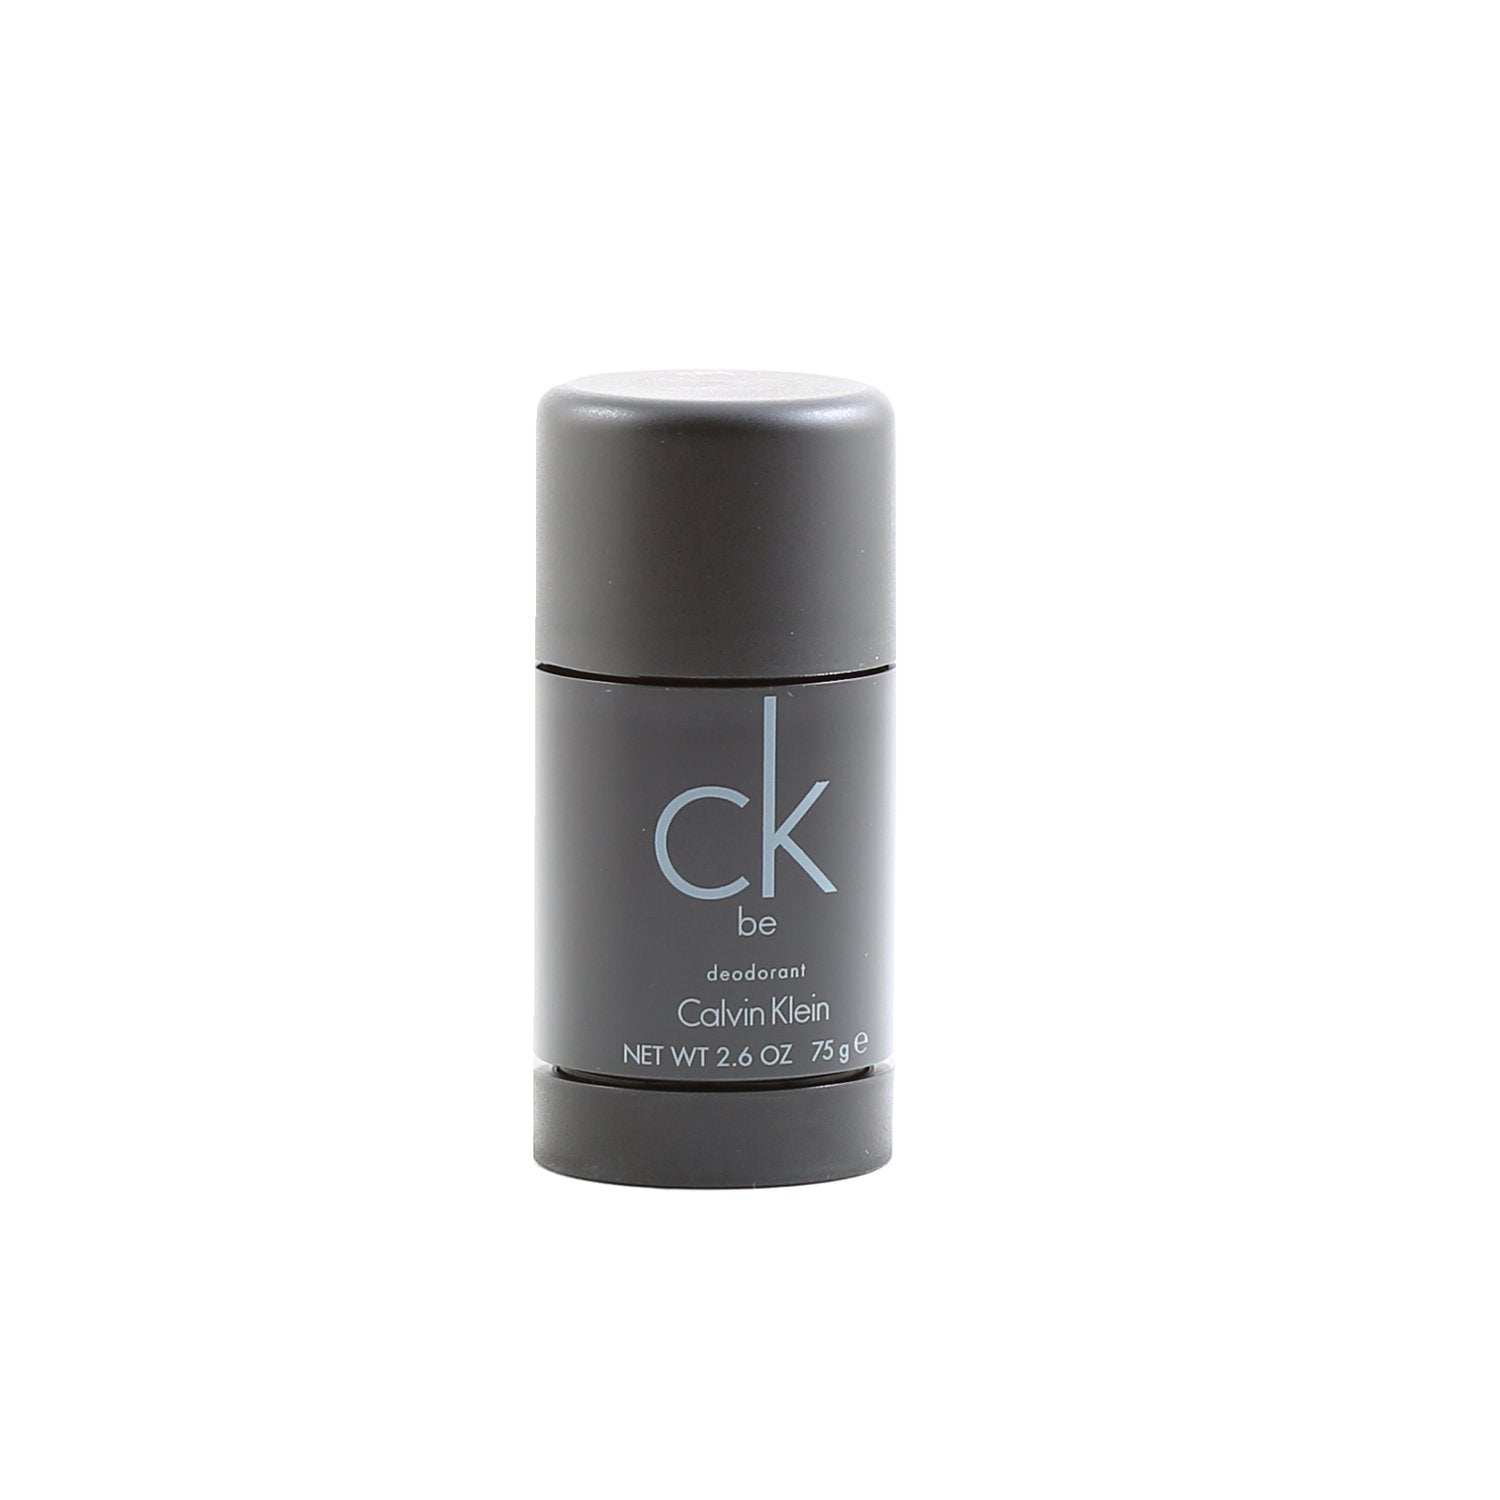 CK BE BY CALVIN KLEIN UNISEX - DEODORANT STICK, 2.5 OZ – Fragrance